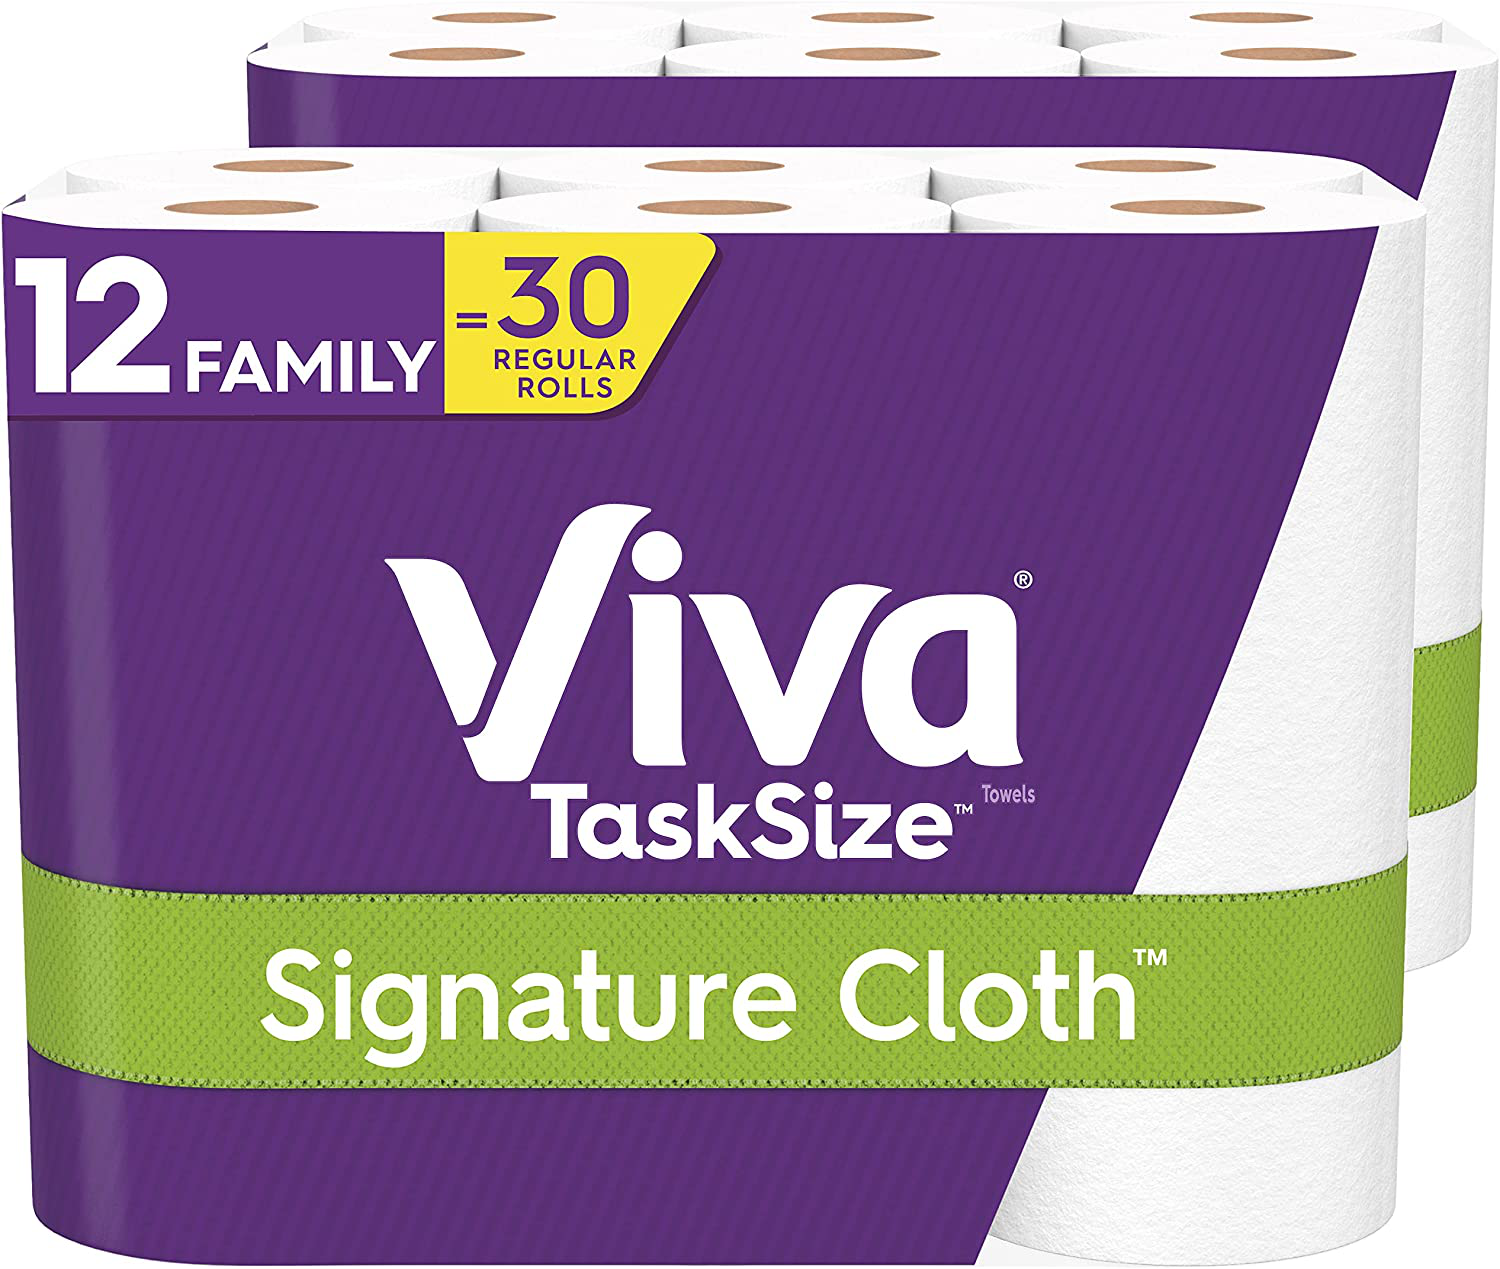 Viva Signature Cloth Paper Towels, Task Size - 12 Family Rolls (2 Packs of 6 Rolls) = 30 Regular Rolls (143 Sheets per Roll)